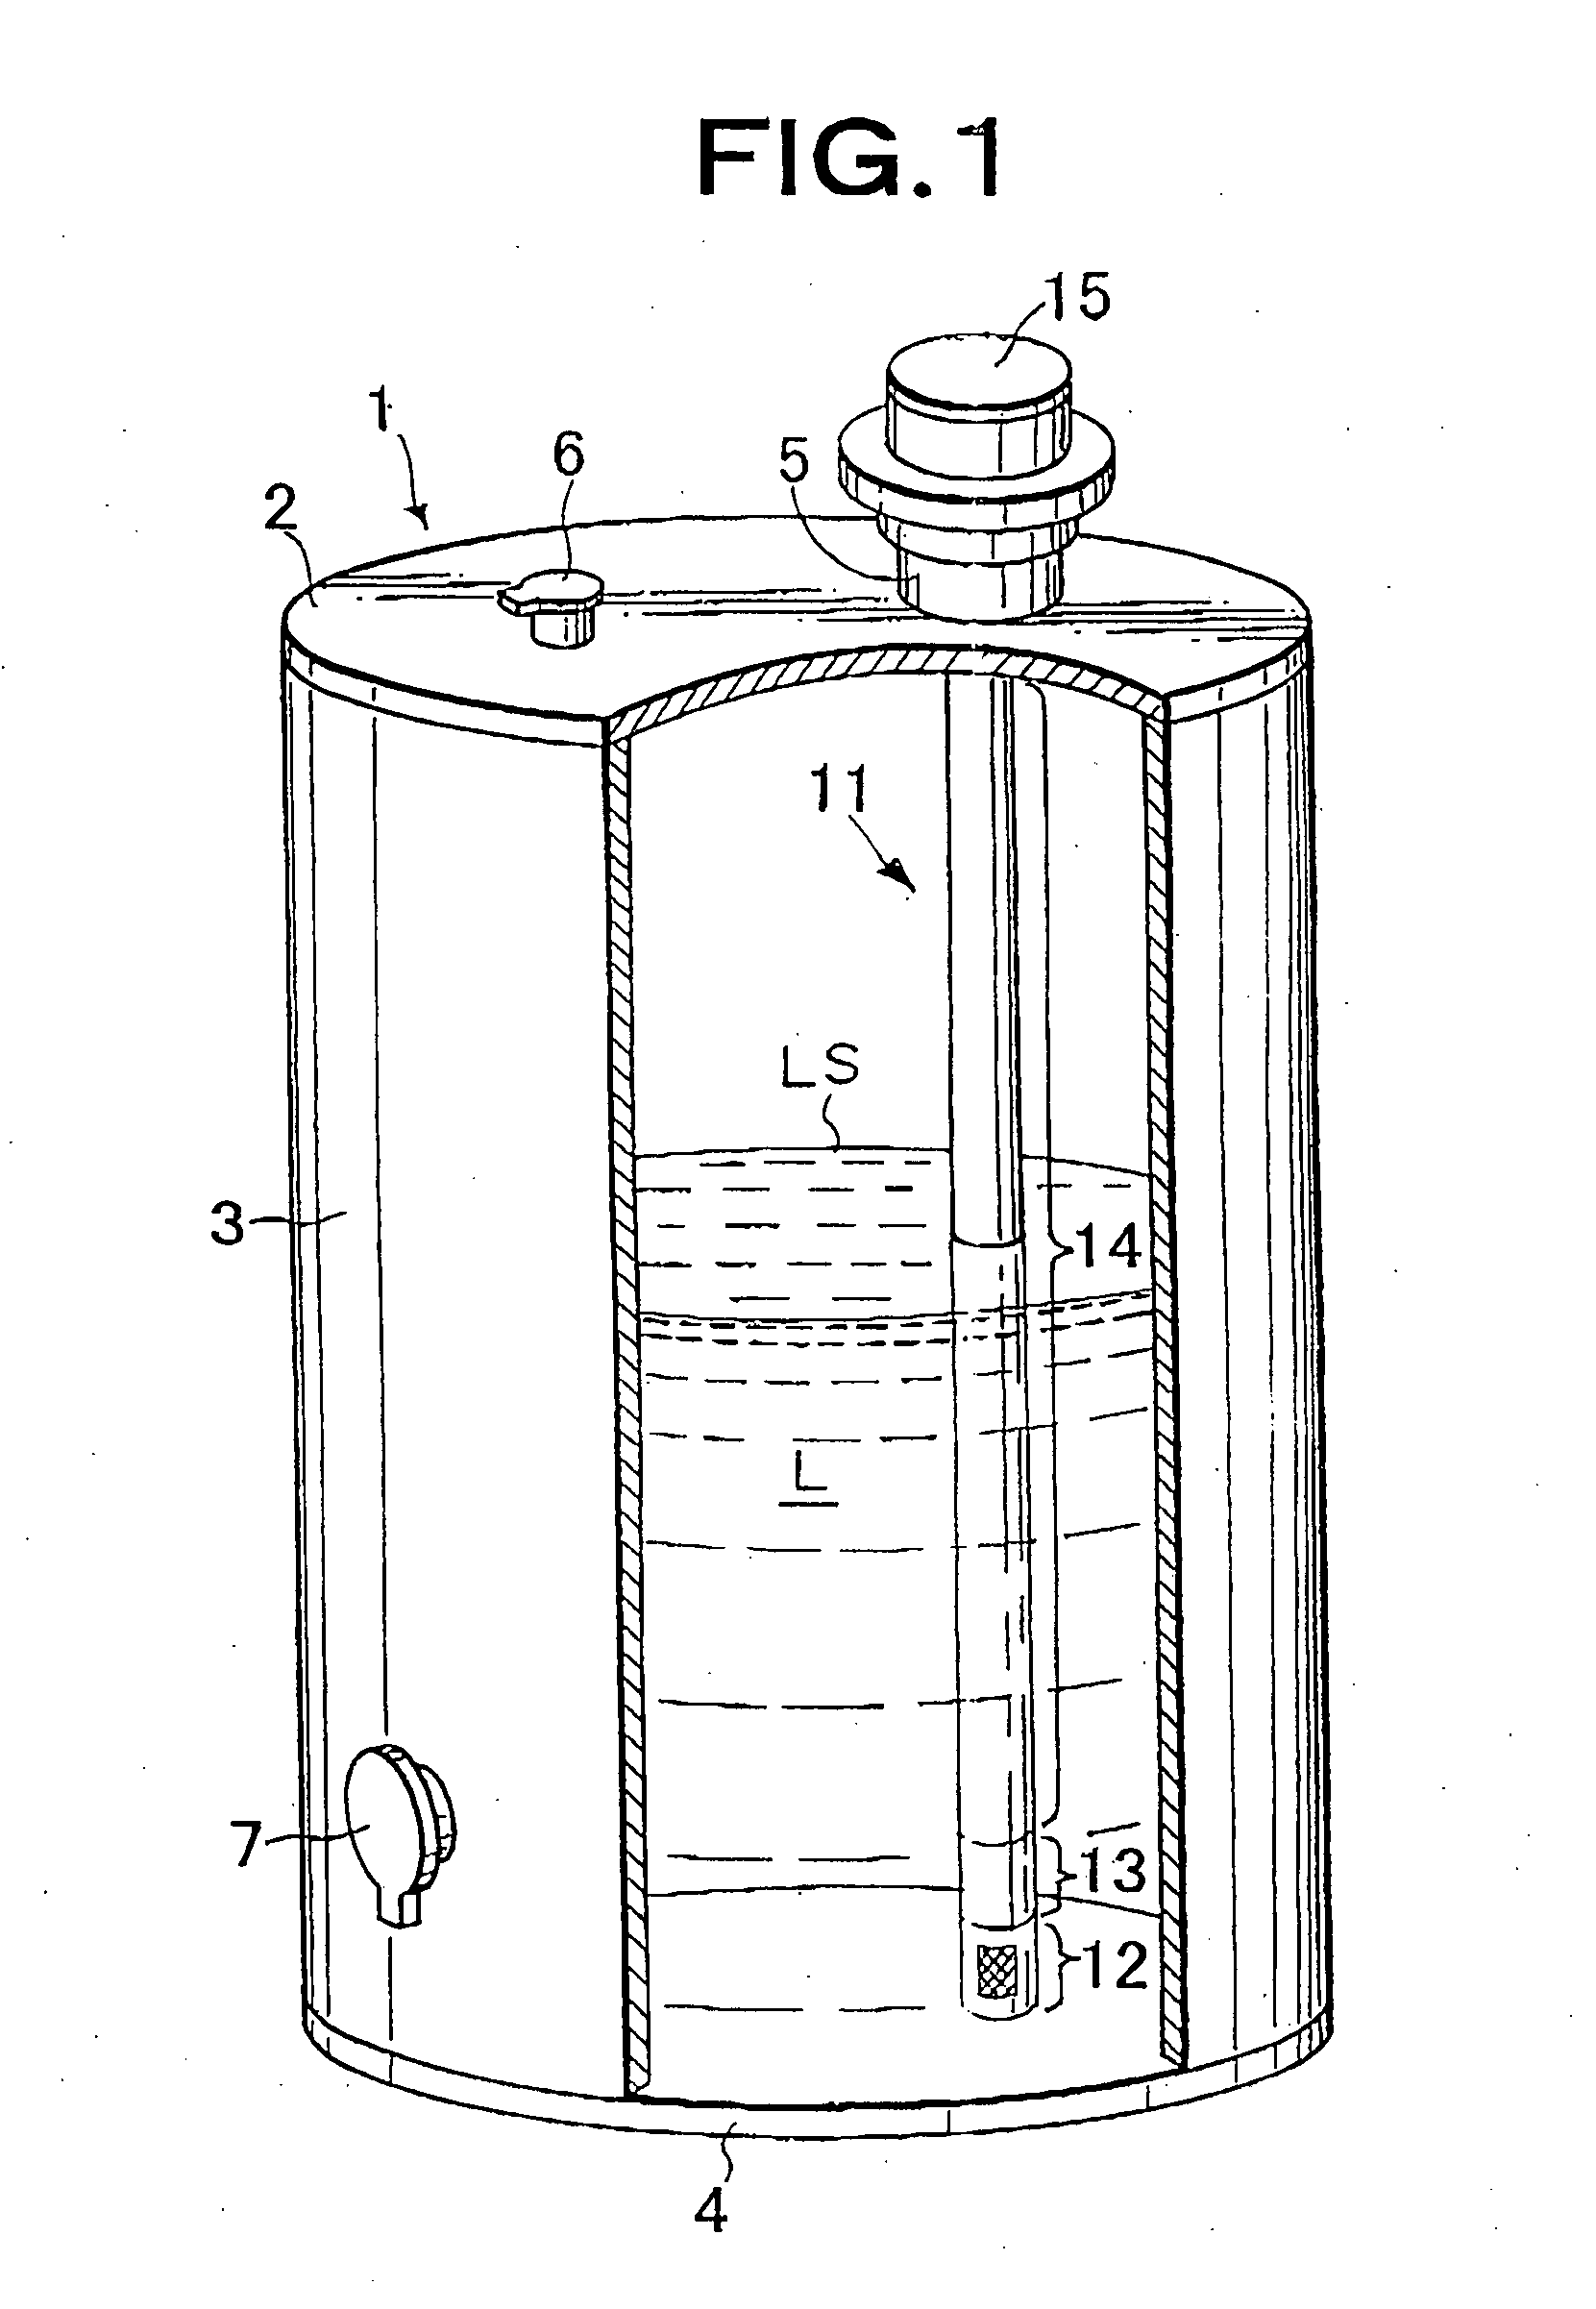 Apparatus for Detecting Leakage of Liquid in Tank